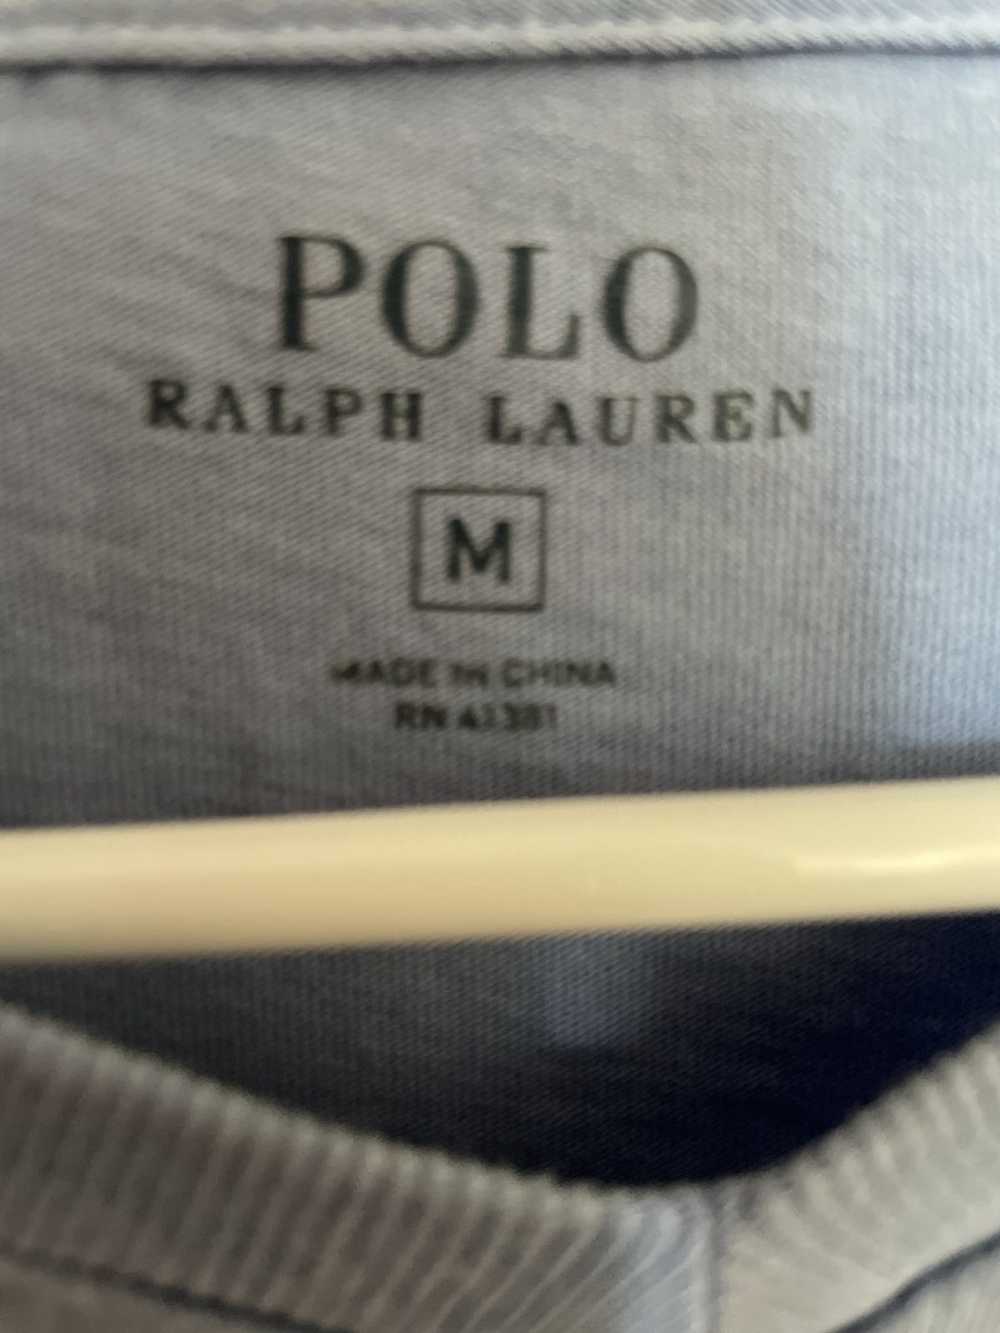 Polo Ralph Lauren Polo Ralph Lauren Vintage V-Neck - image 3